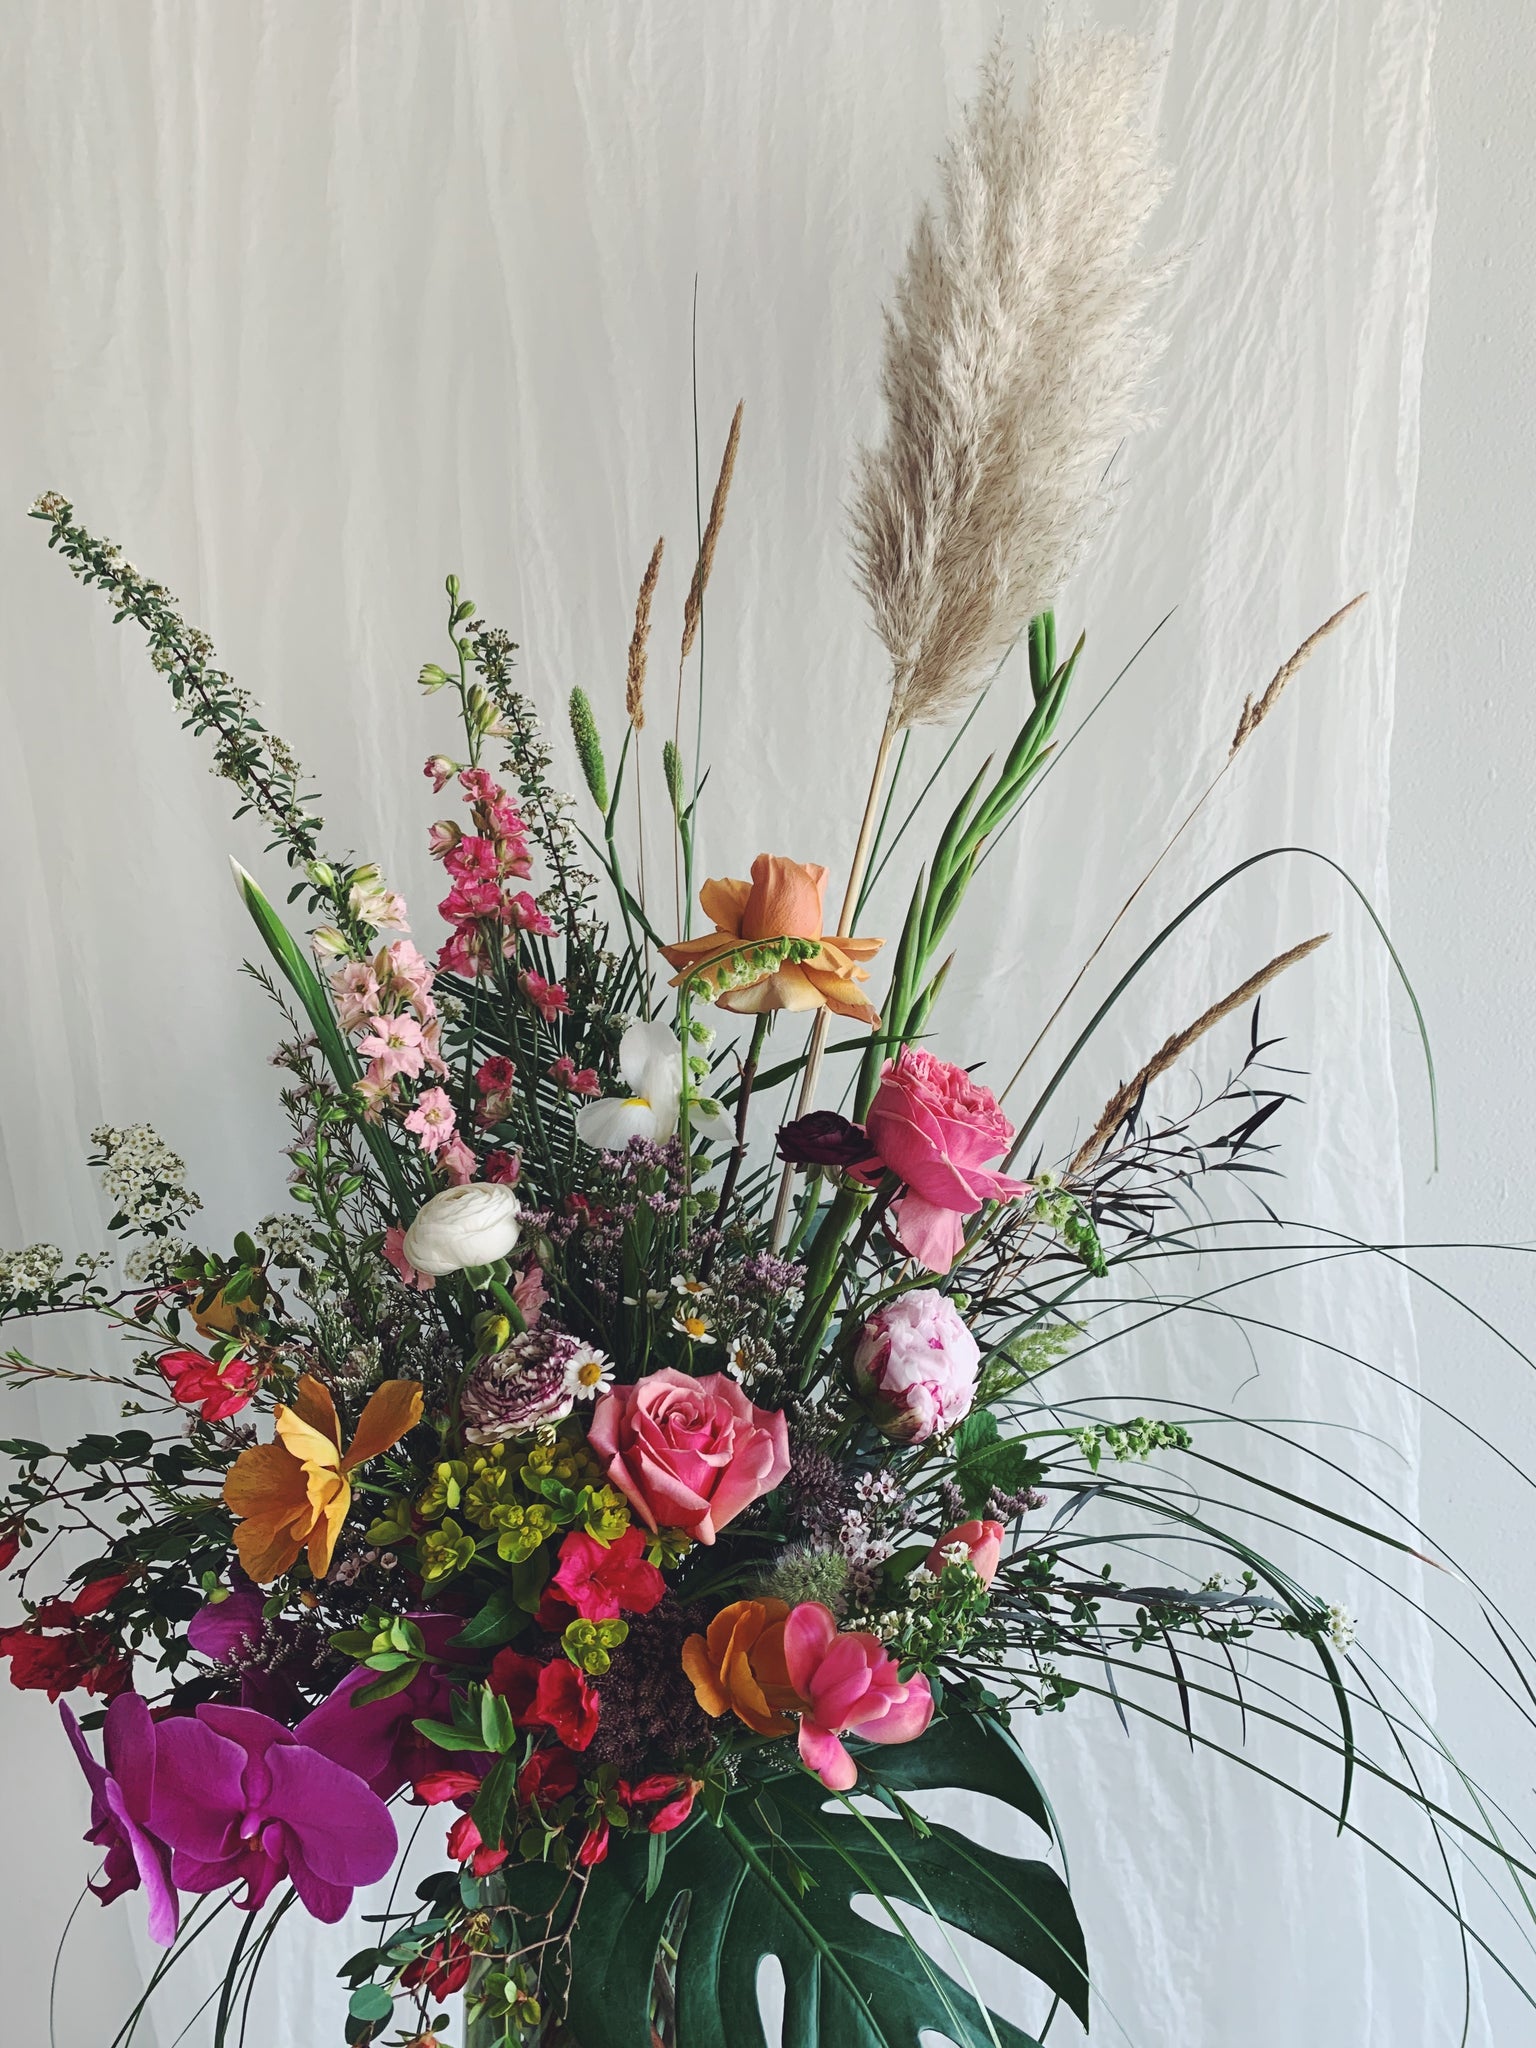 Flower Delivery Vancouver-The Mother's Day Focal Arrangement-Arrangements-Florist-The Wild Bunch Flower Shop